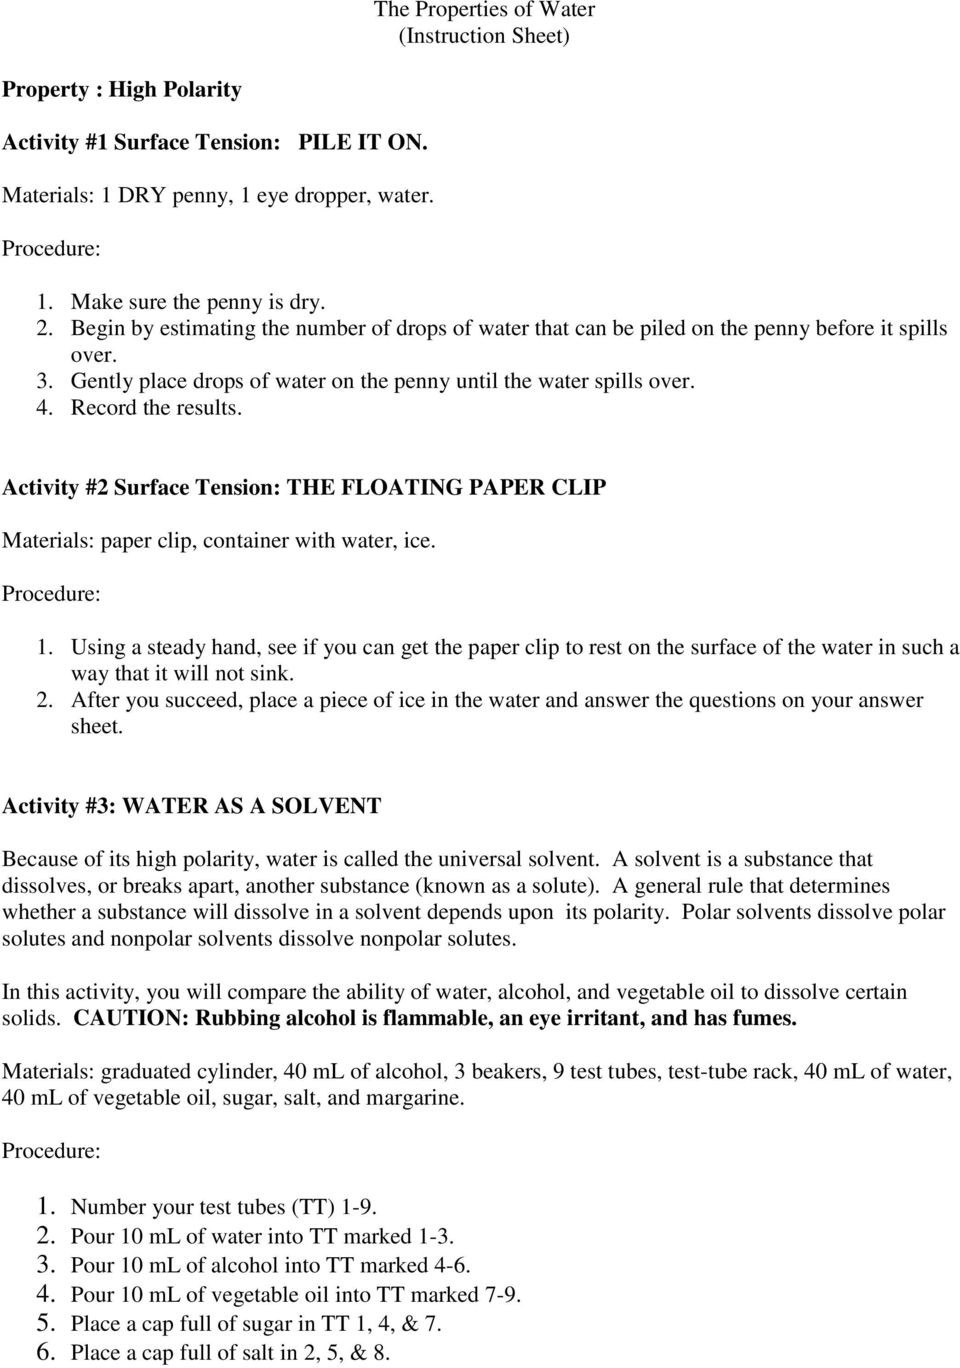 Properties Of Water Worksheet Biology the Properties Of Water Instruction Sheet Pdf Free Download